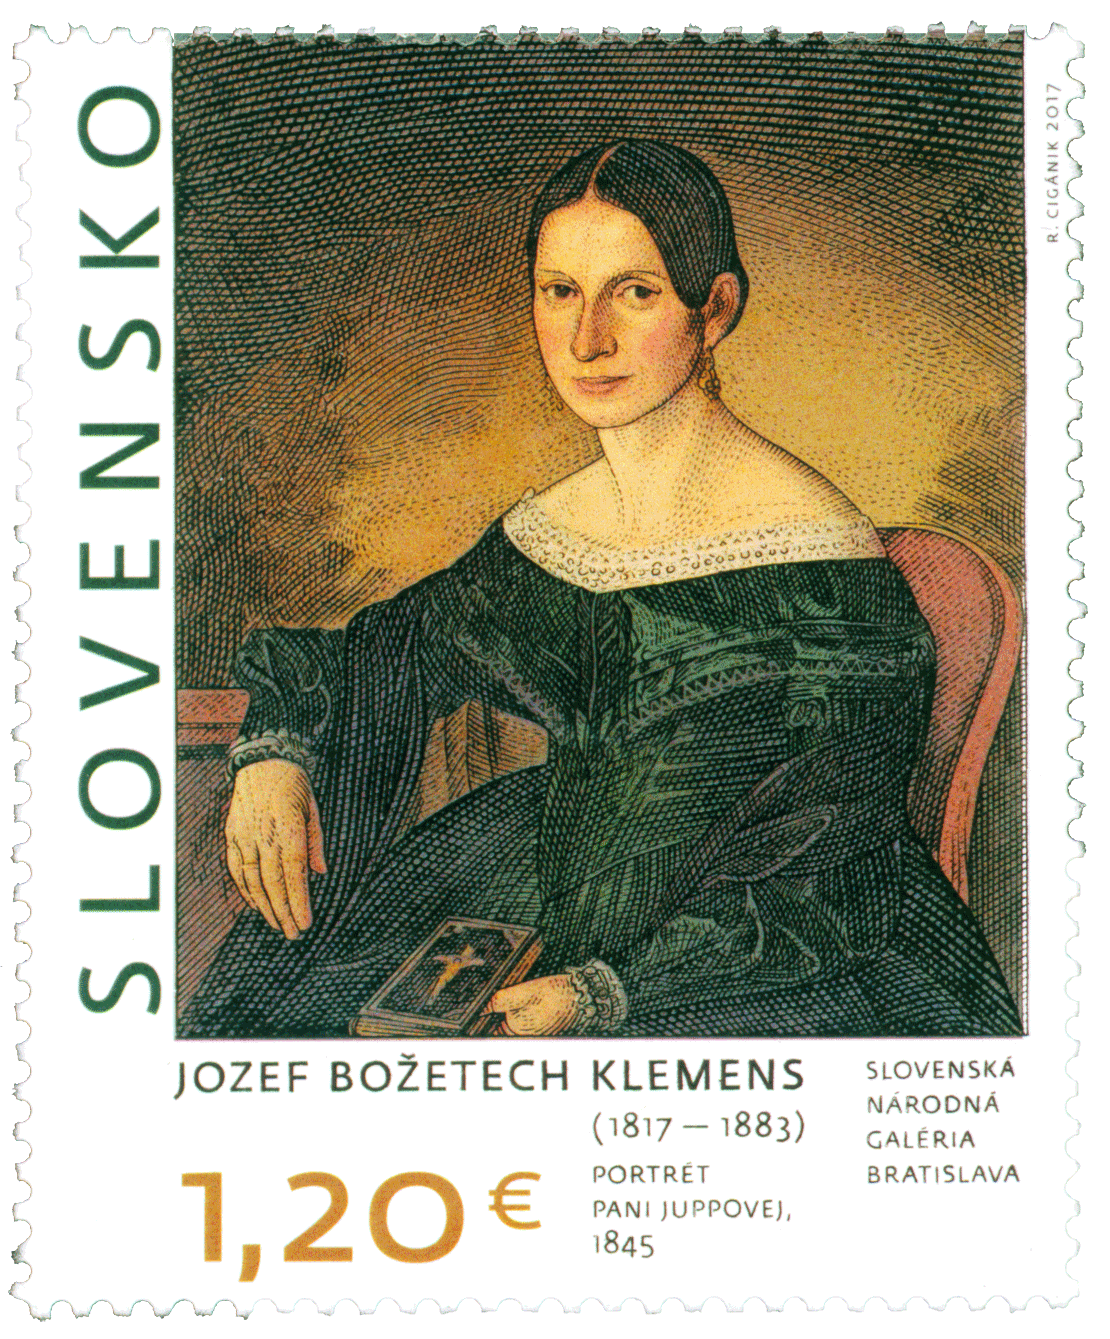 644 - ART: Jozef Božetech Klemens (1817 – 1883) 